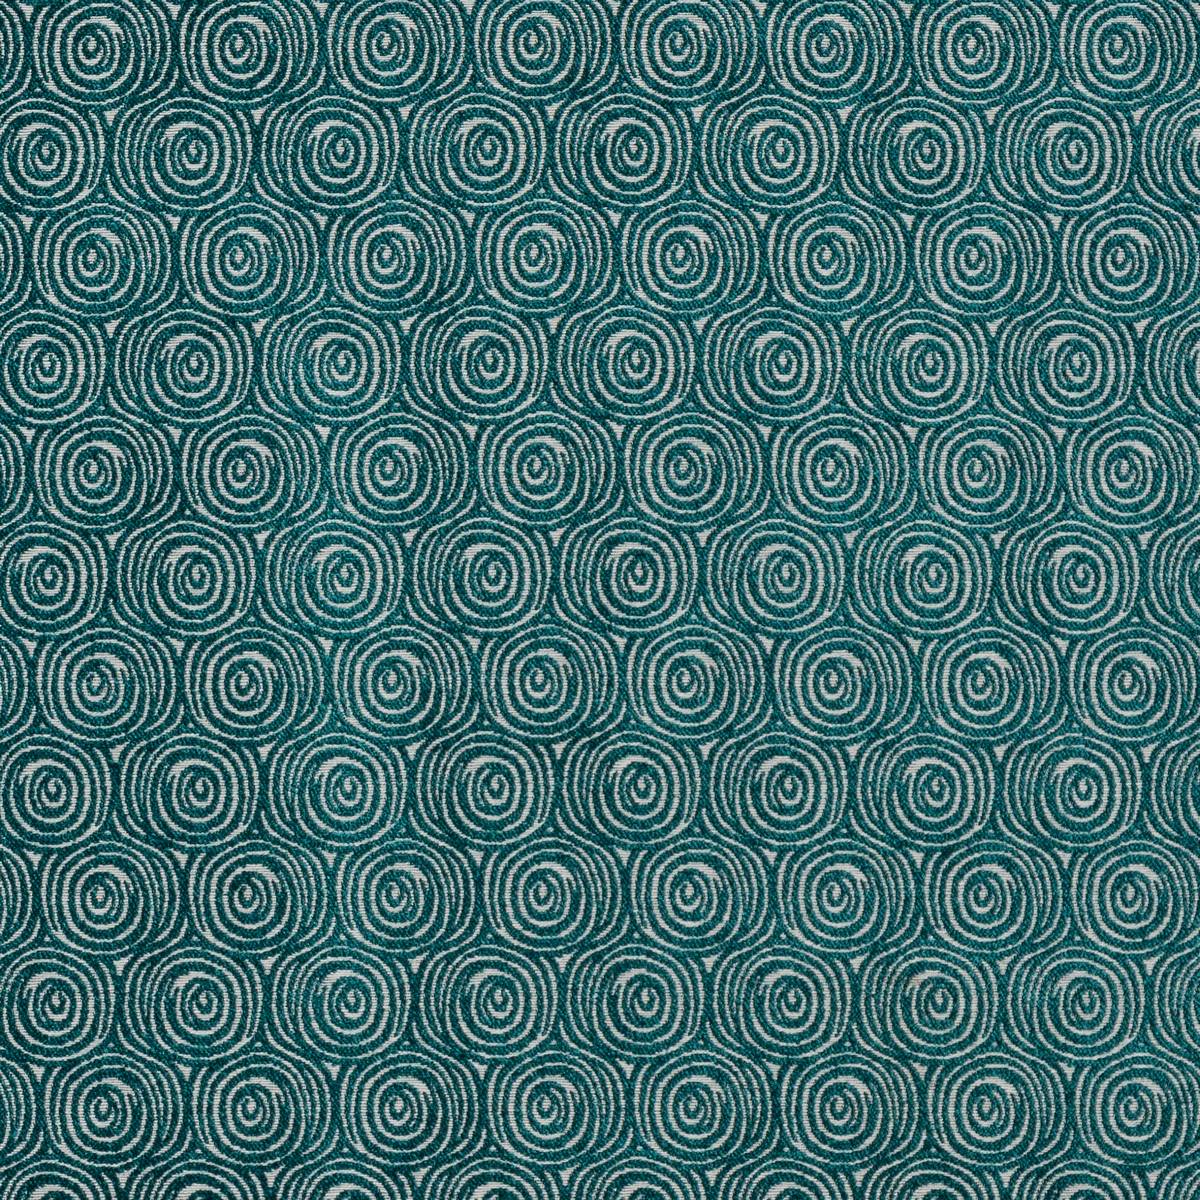 Odyssey Teal Fabric by Fryetts